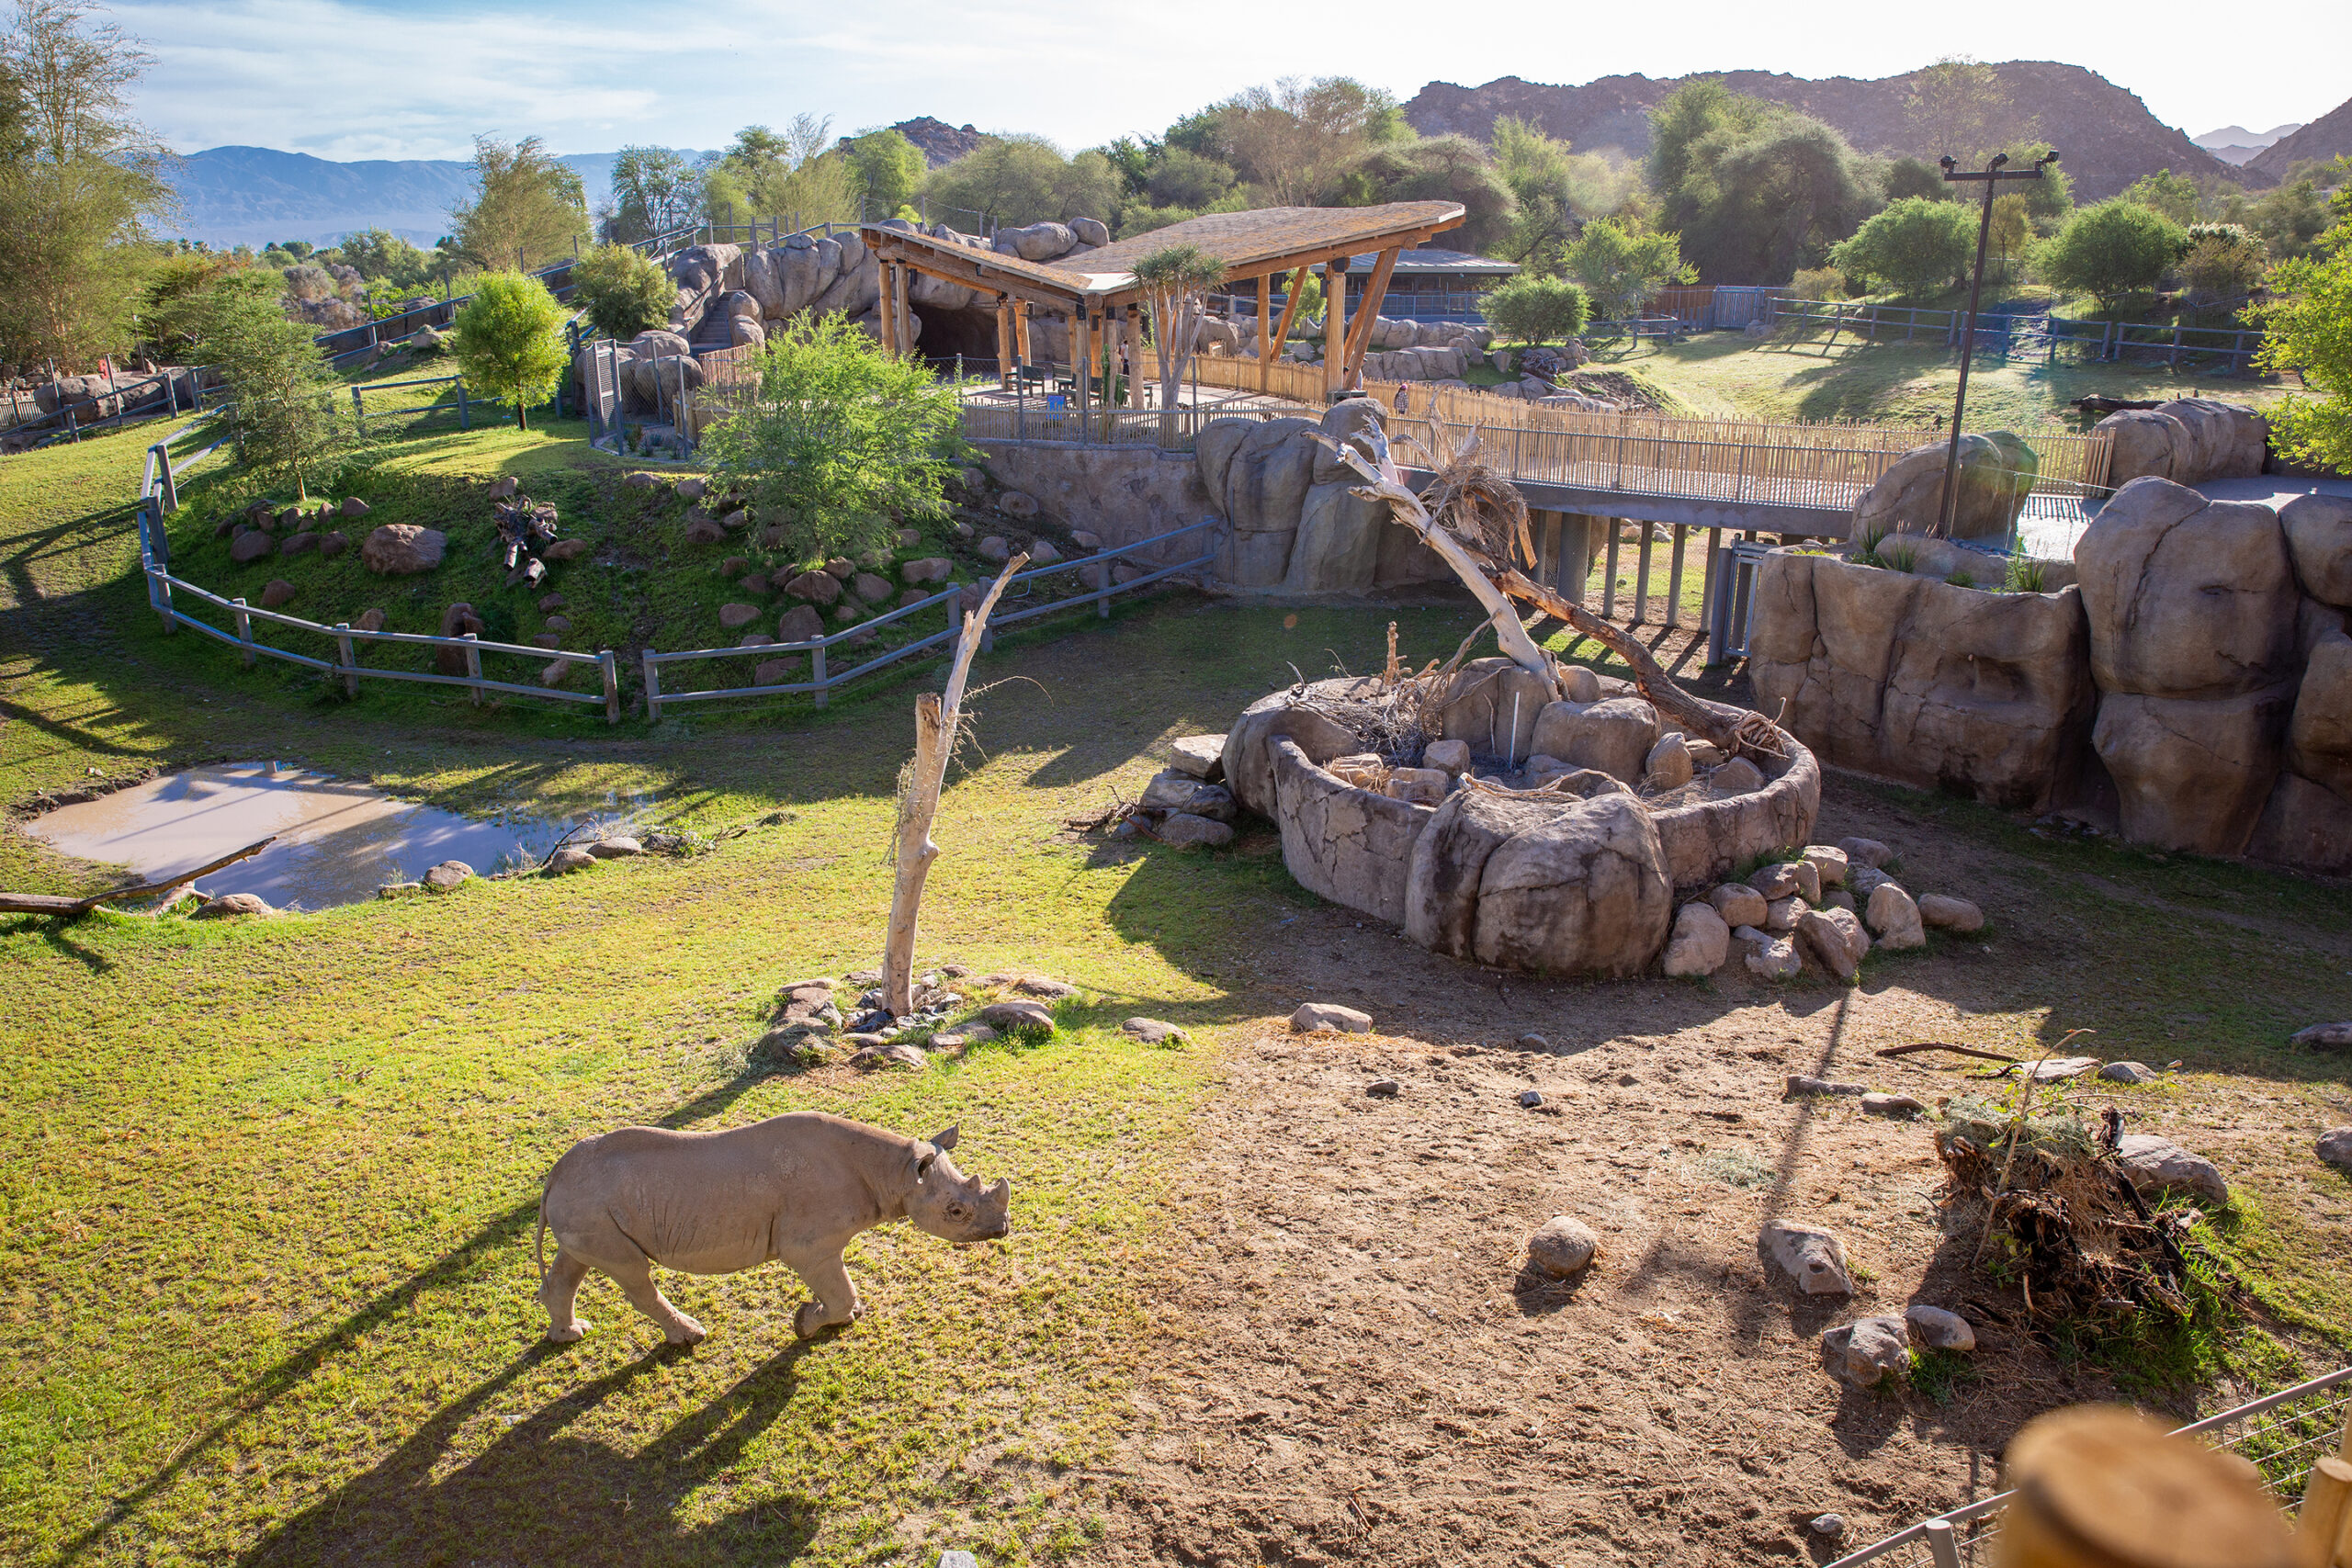 Rhinos Savanna at The Living Desert Gardens and Zoo